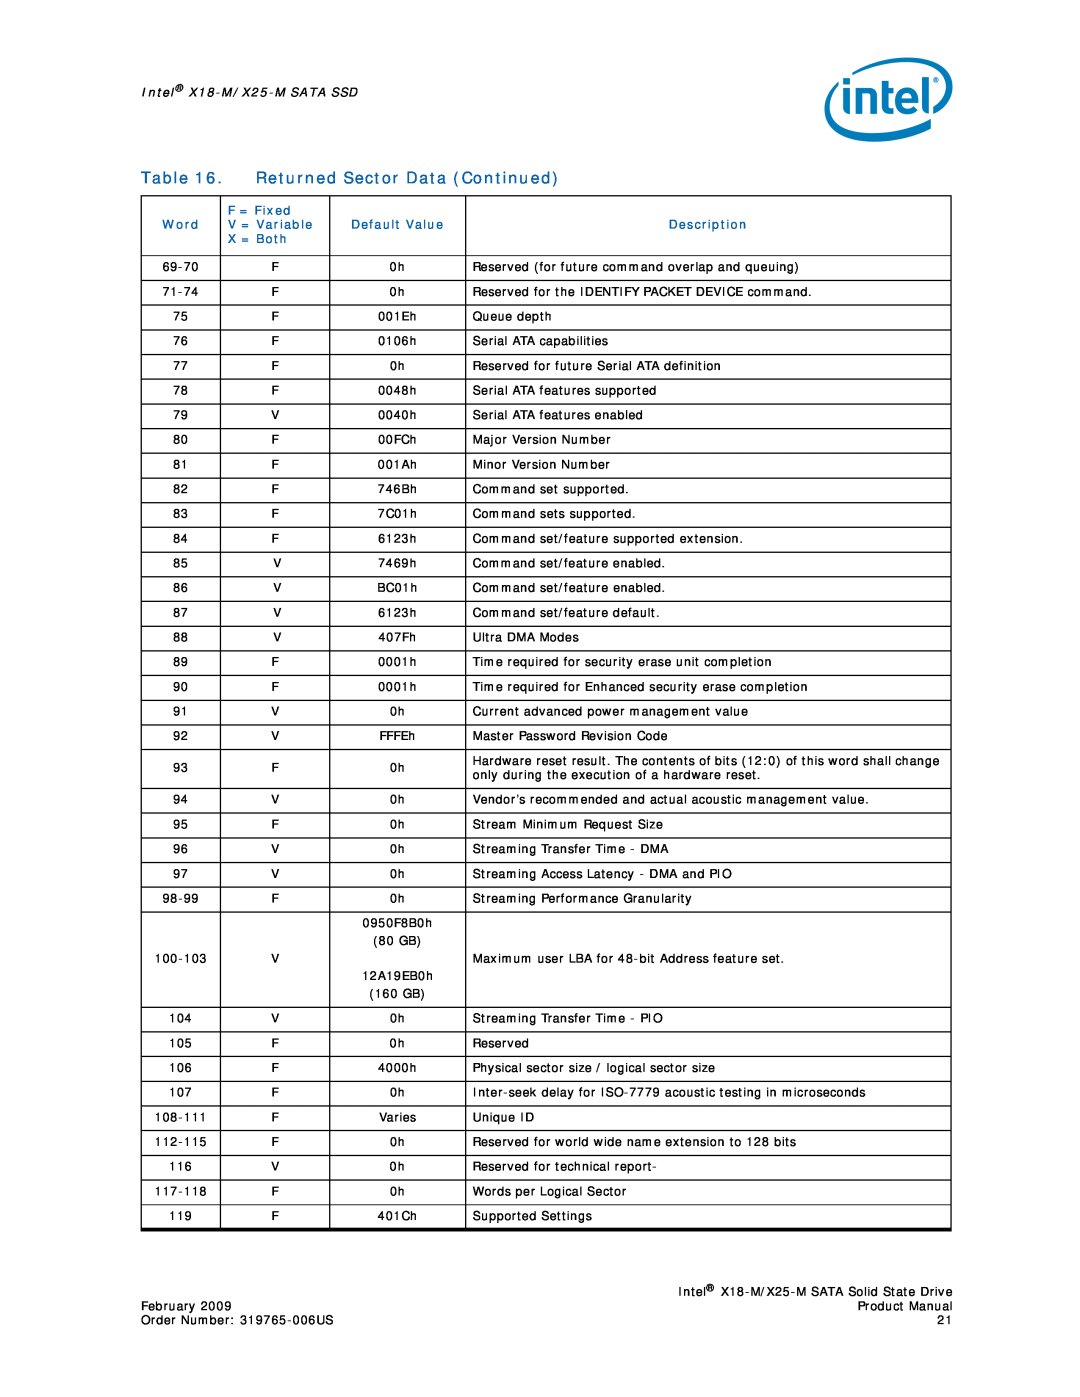 Intel specifications Returned Sector Data Continued, Intel X18-M/X25-MSATA SSD 